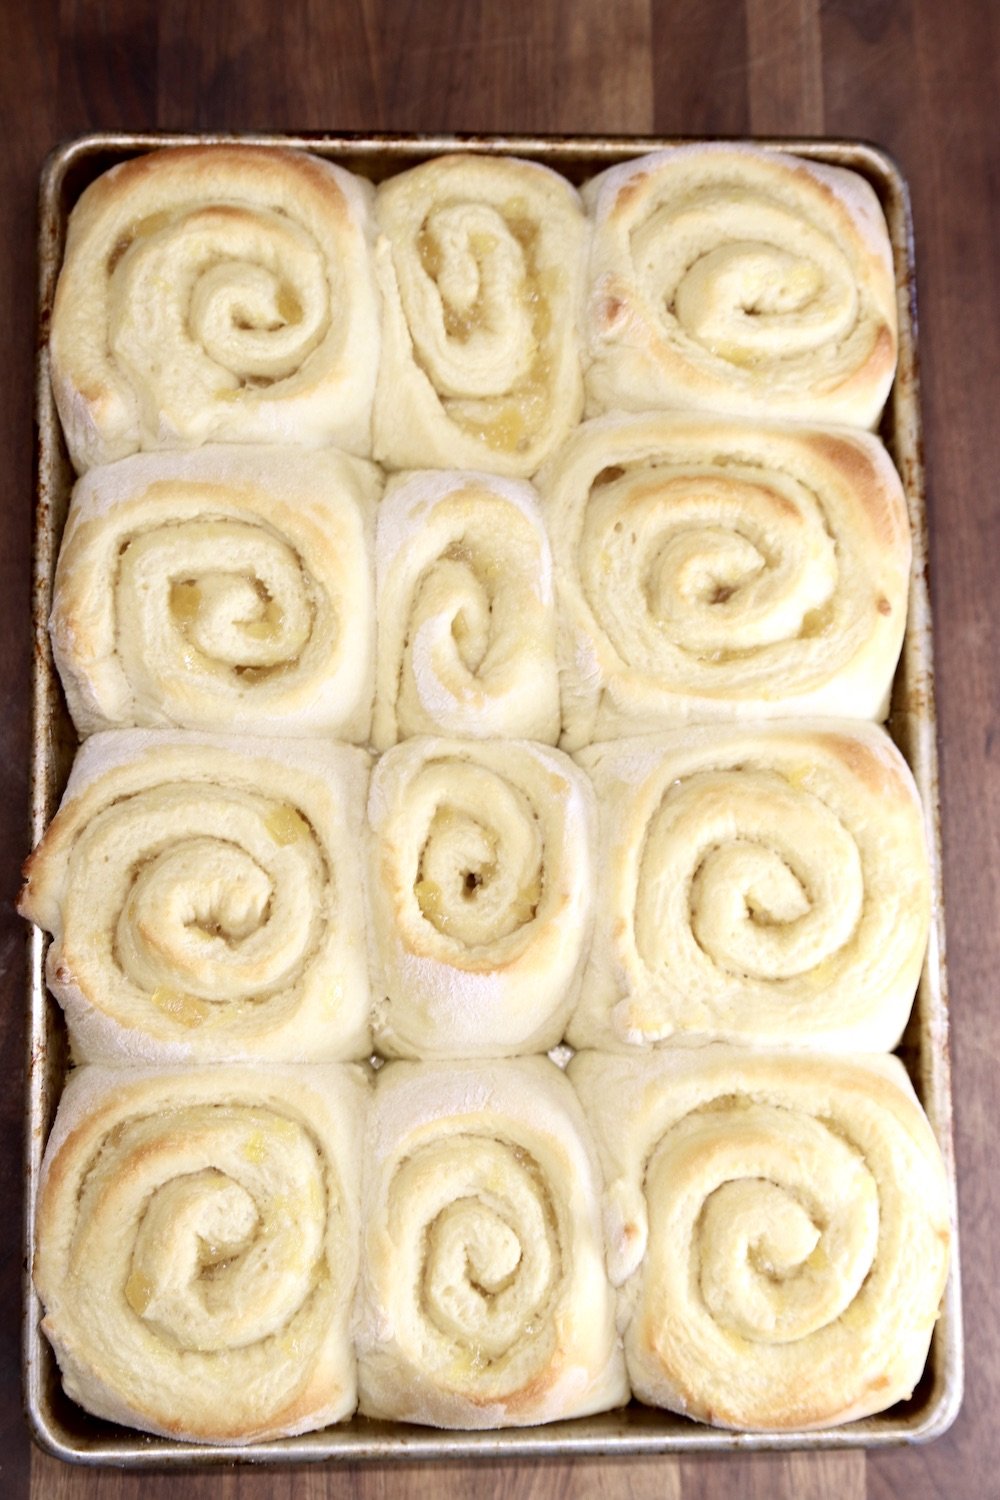 sheet pan of baked sweet rolls